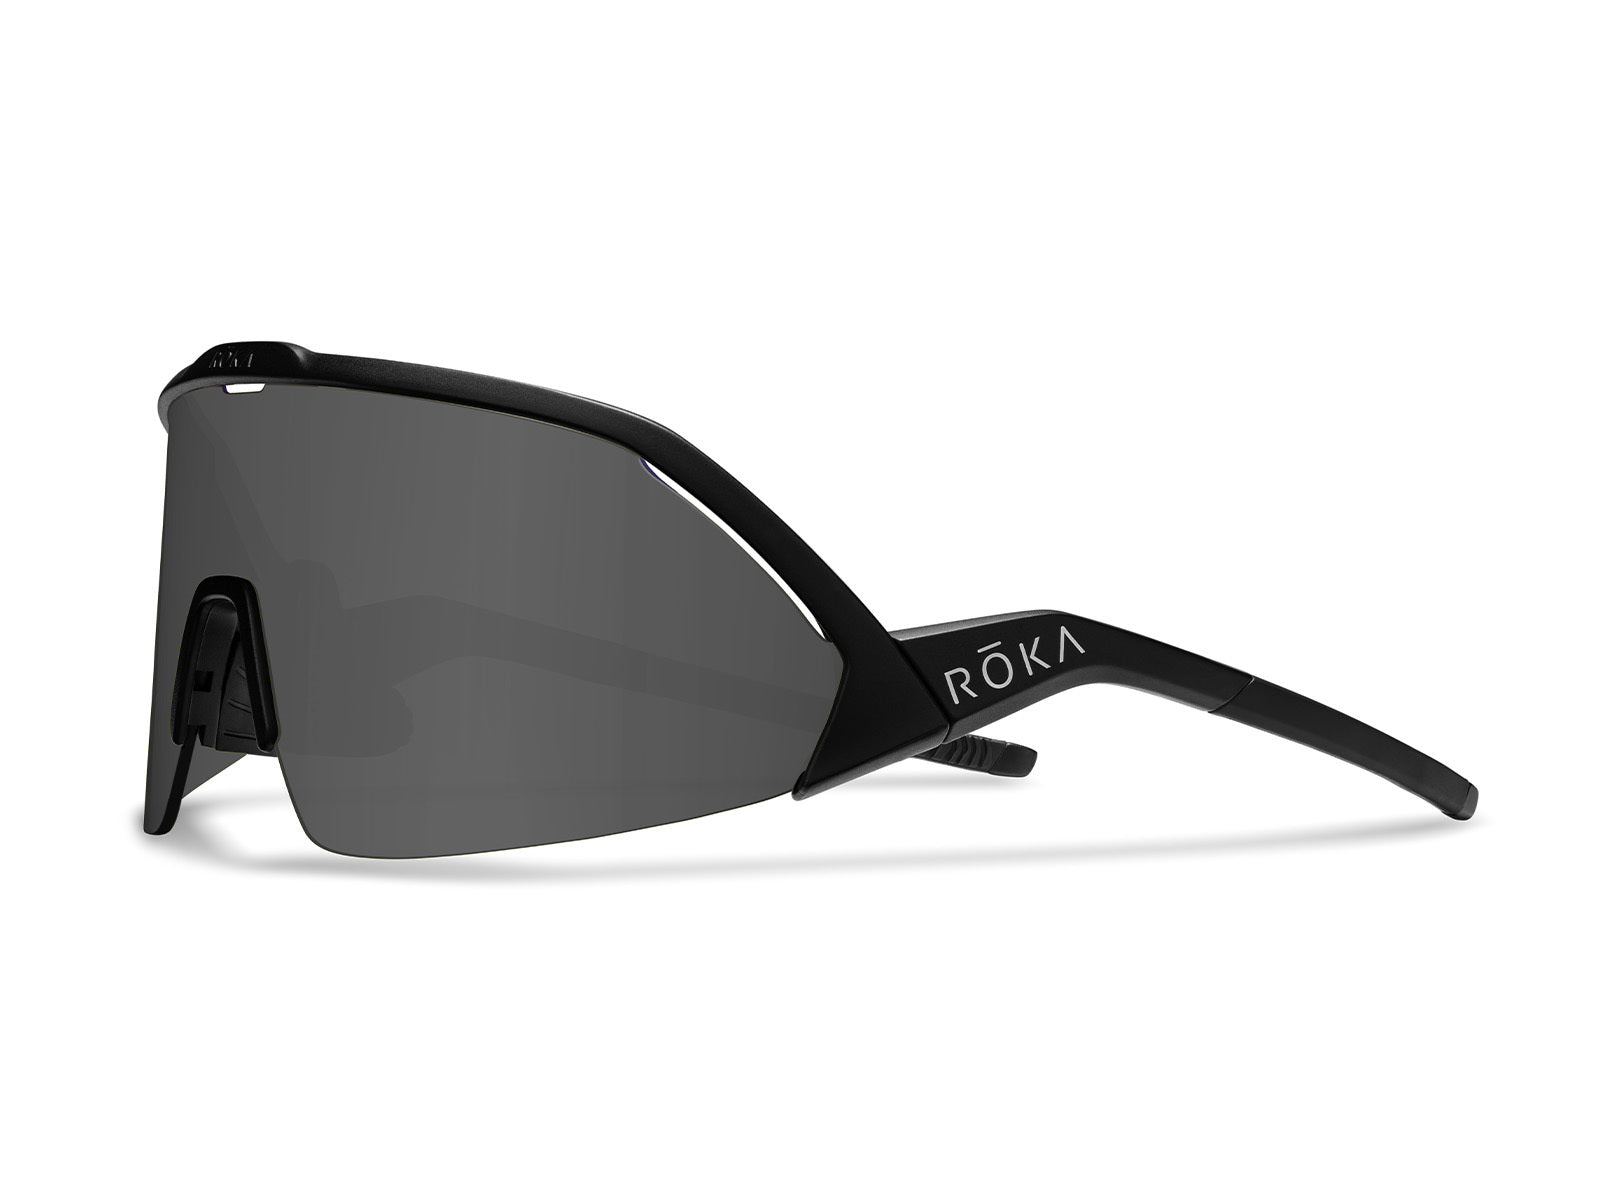 Matador Air Shield Sunglasses - Buy Online